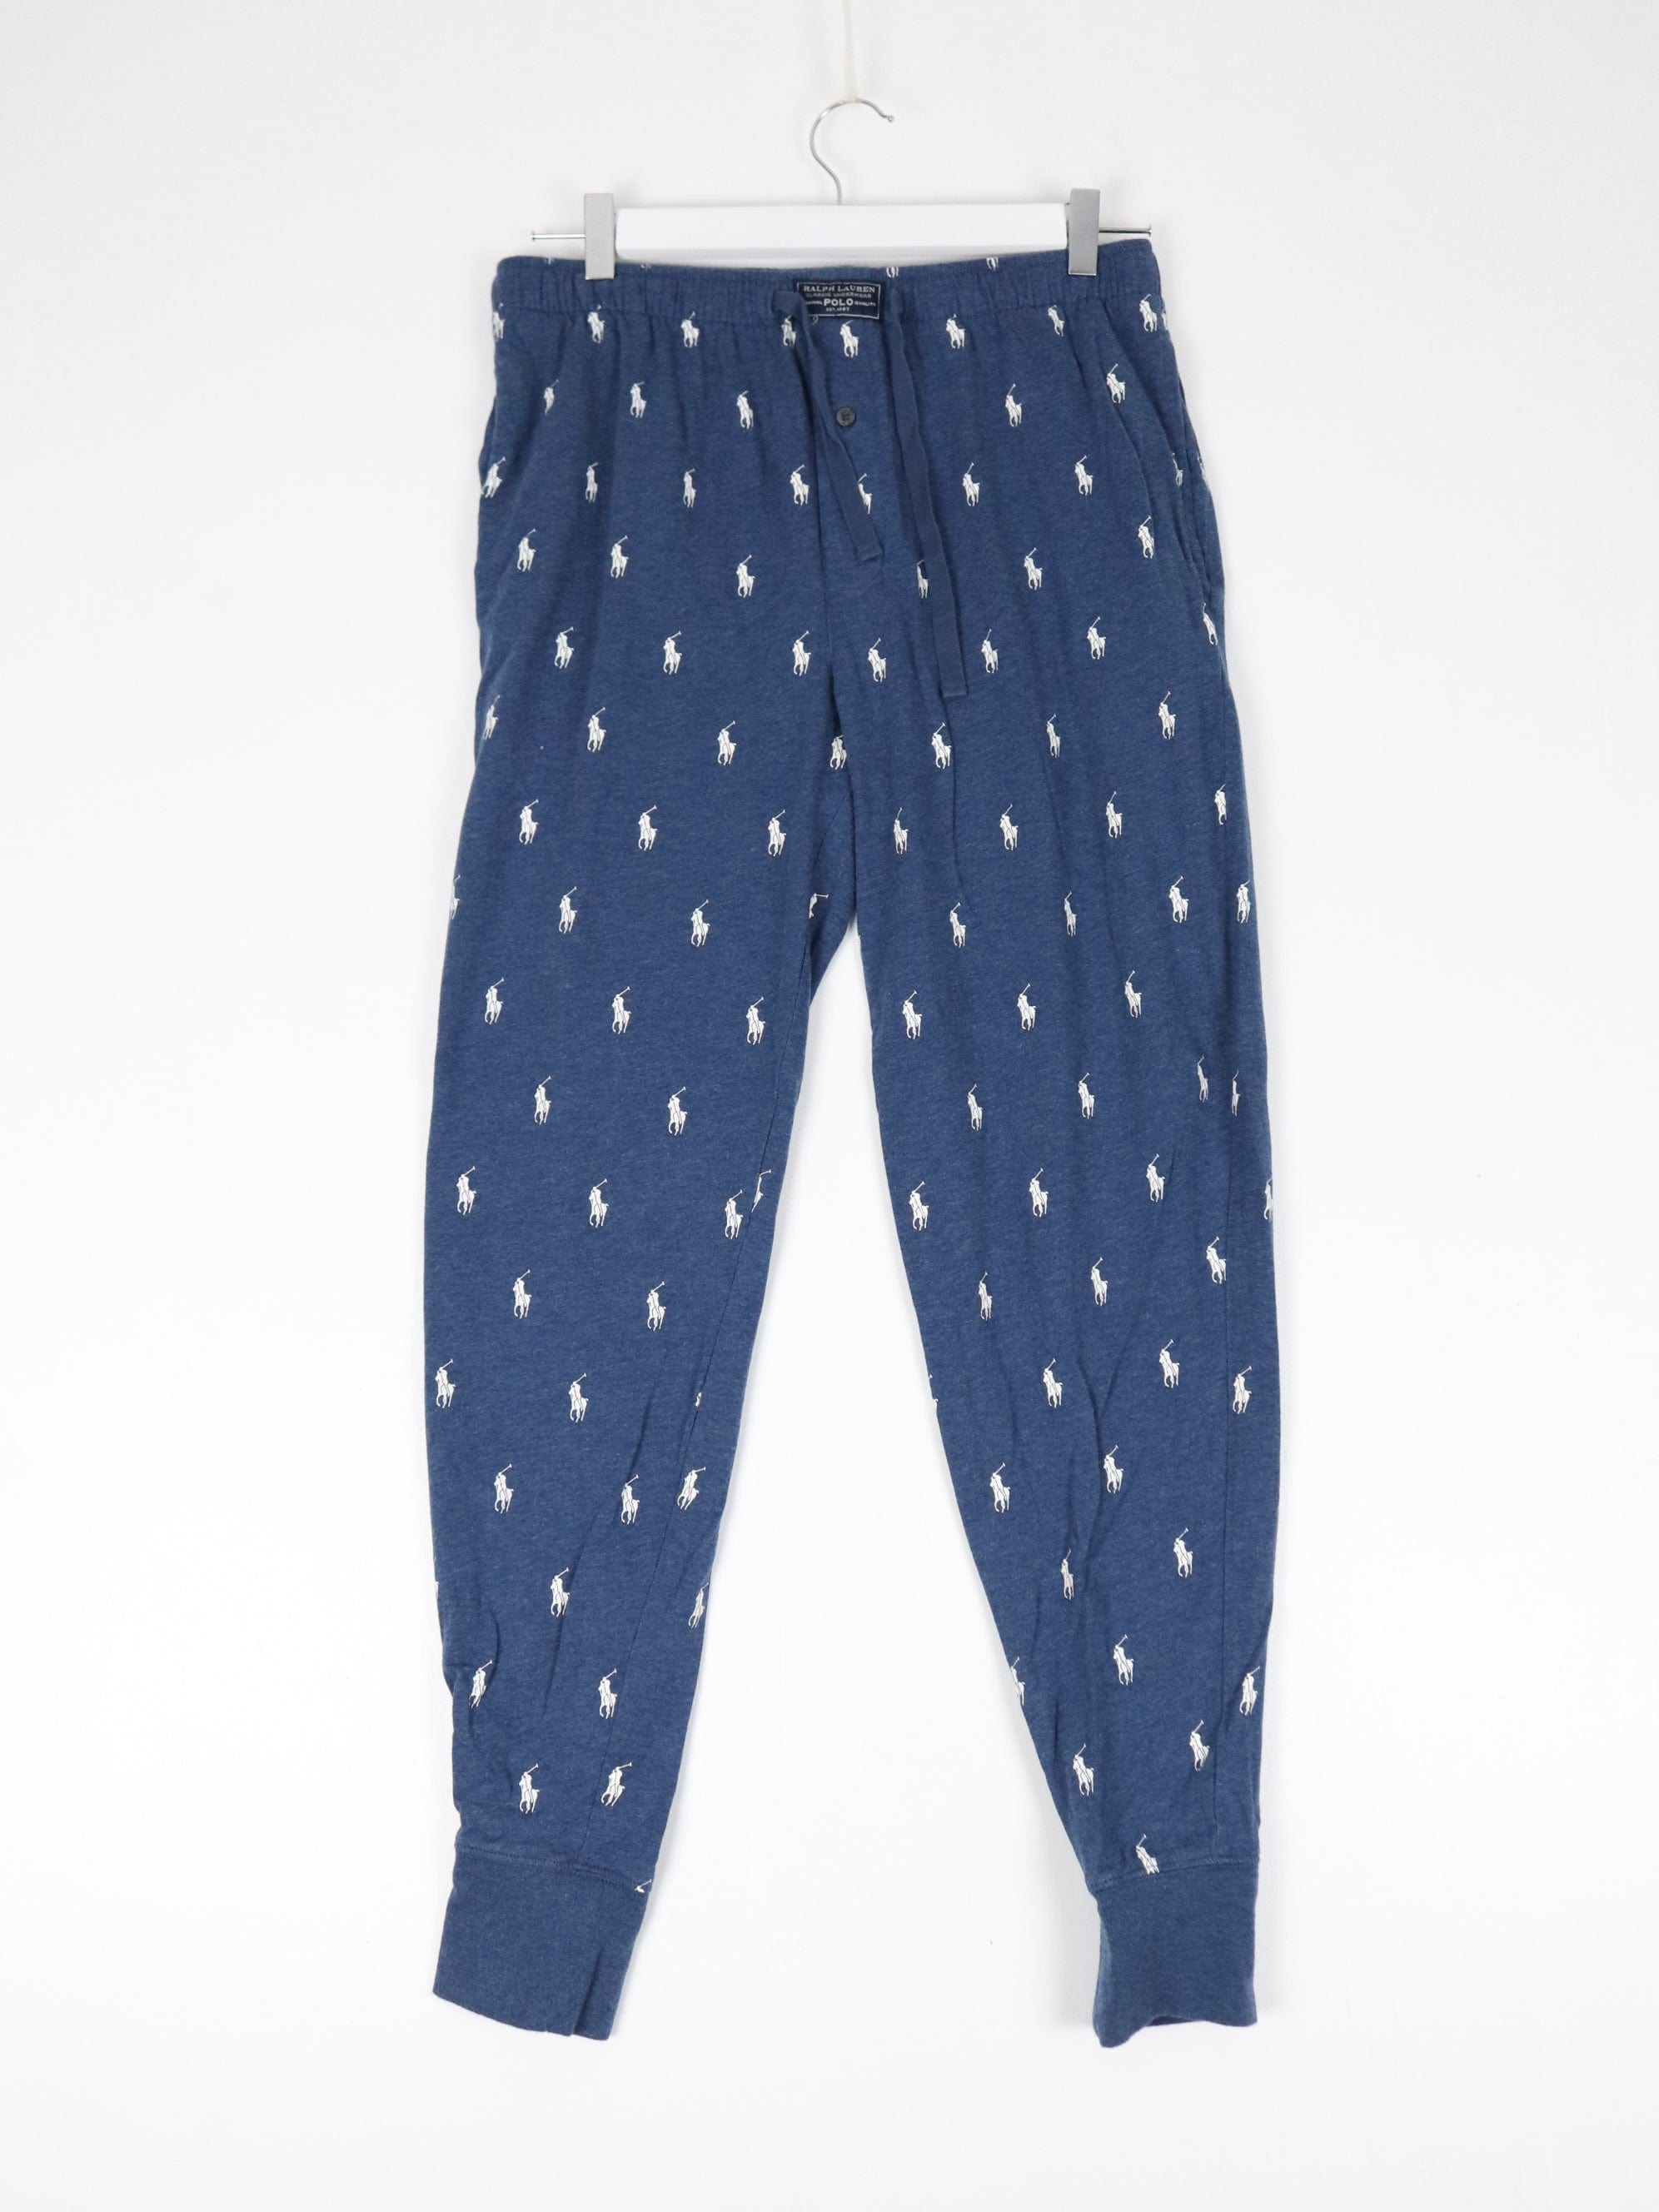 NWT Polo Ralph Lauren All Over Print Pajama Pants Navy blue Size 4XT Tall